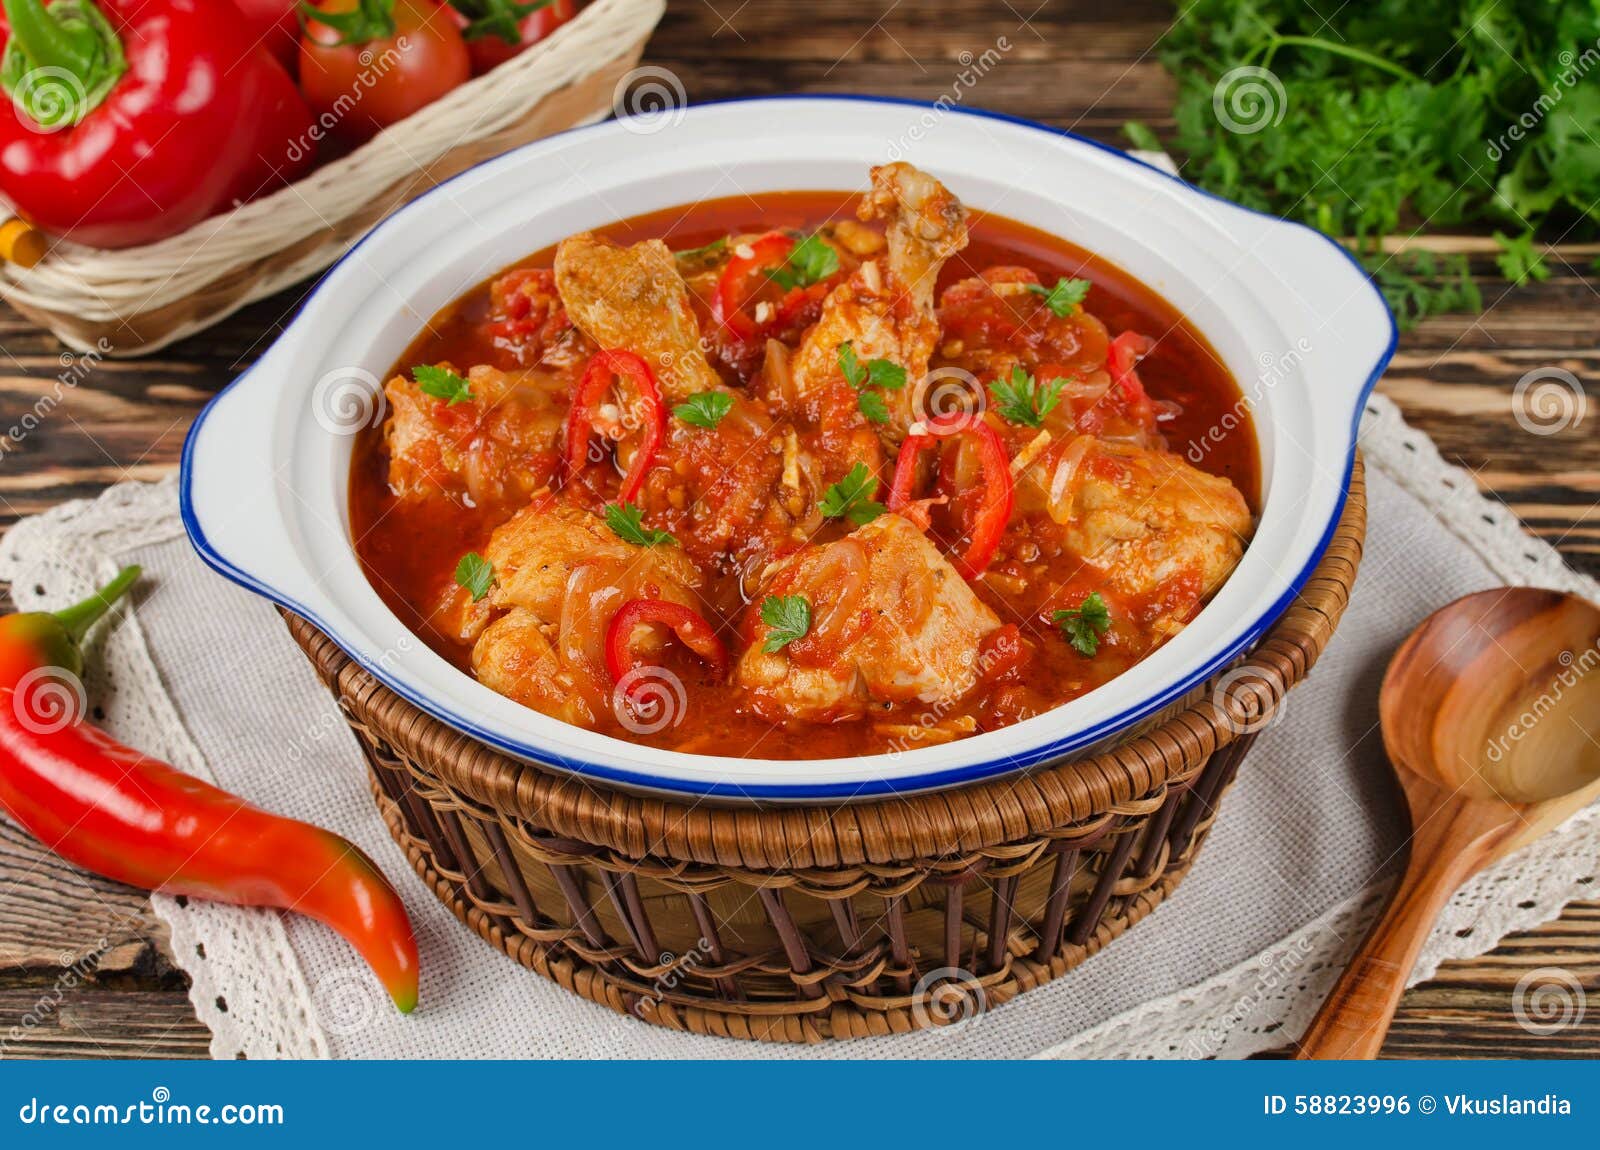 chakhokhbili - chicken stewed with tomatoes